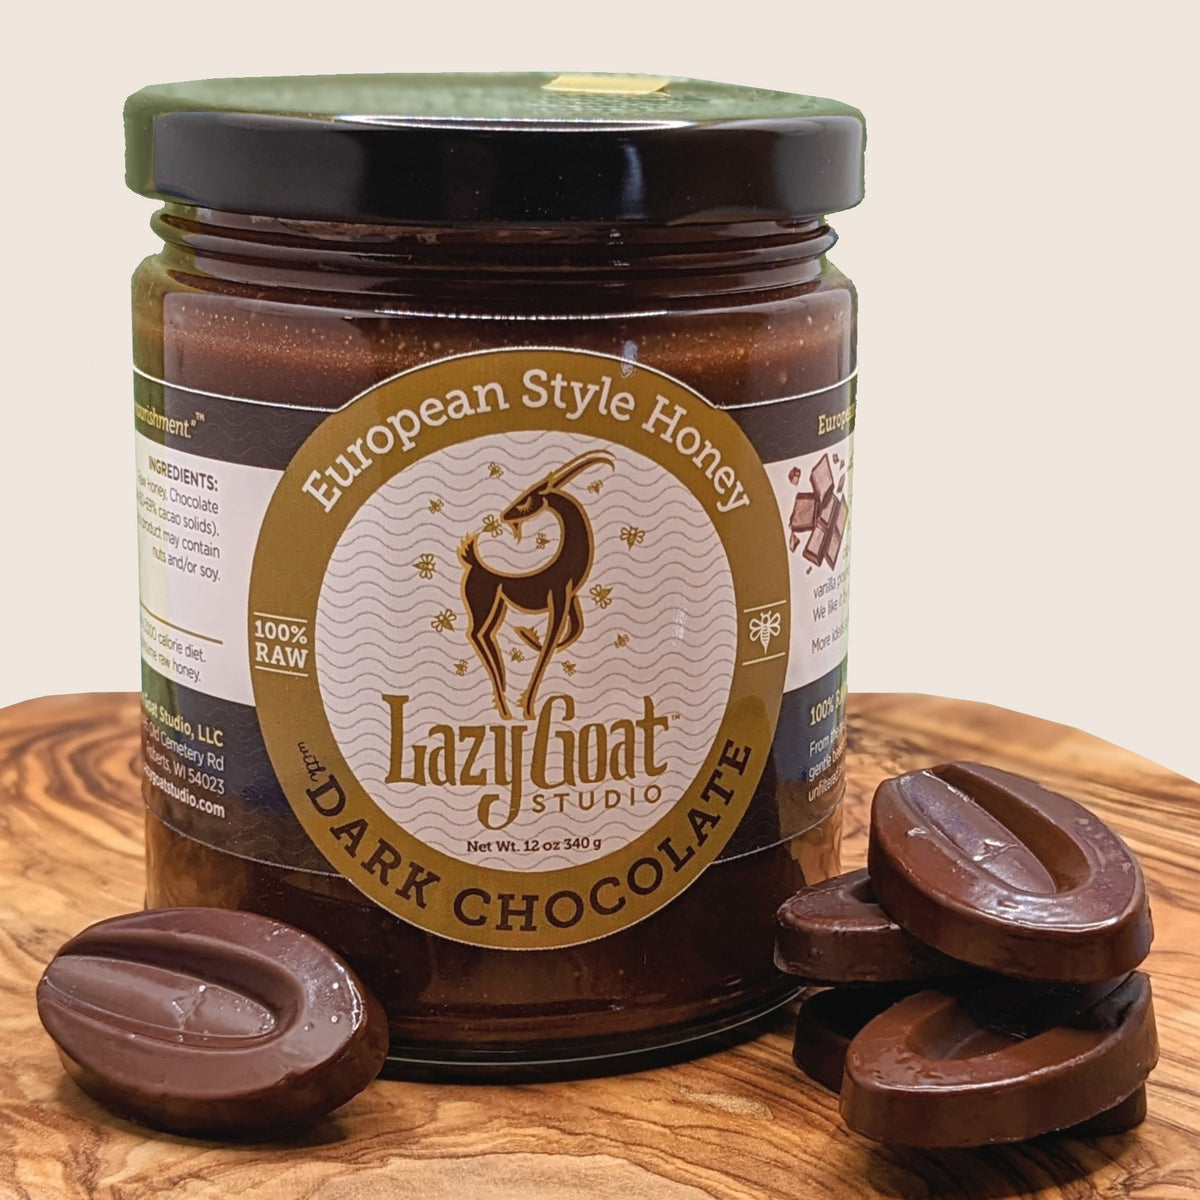 Dark Chocolate "Euro Style Creamed Honey -Euro Style in a 12oz glass jar.